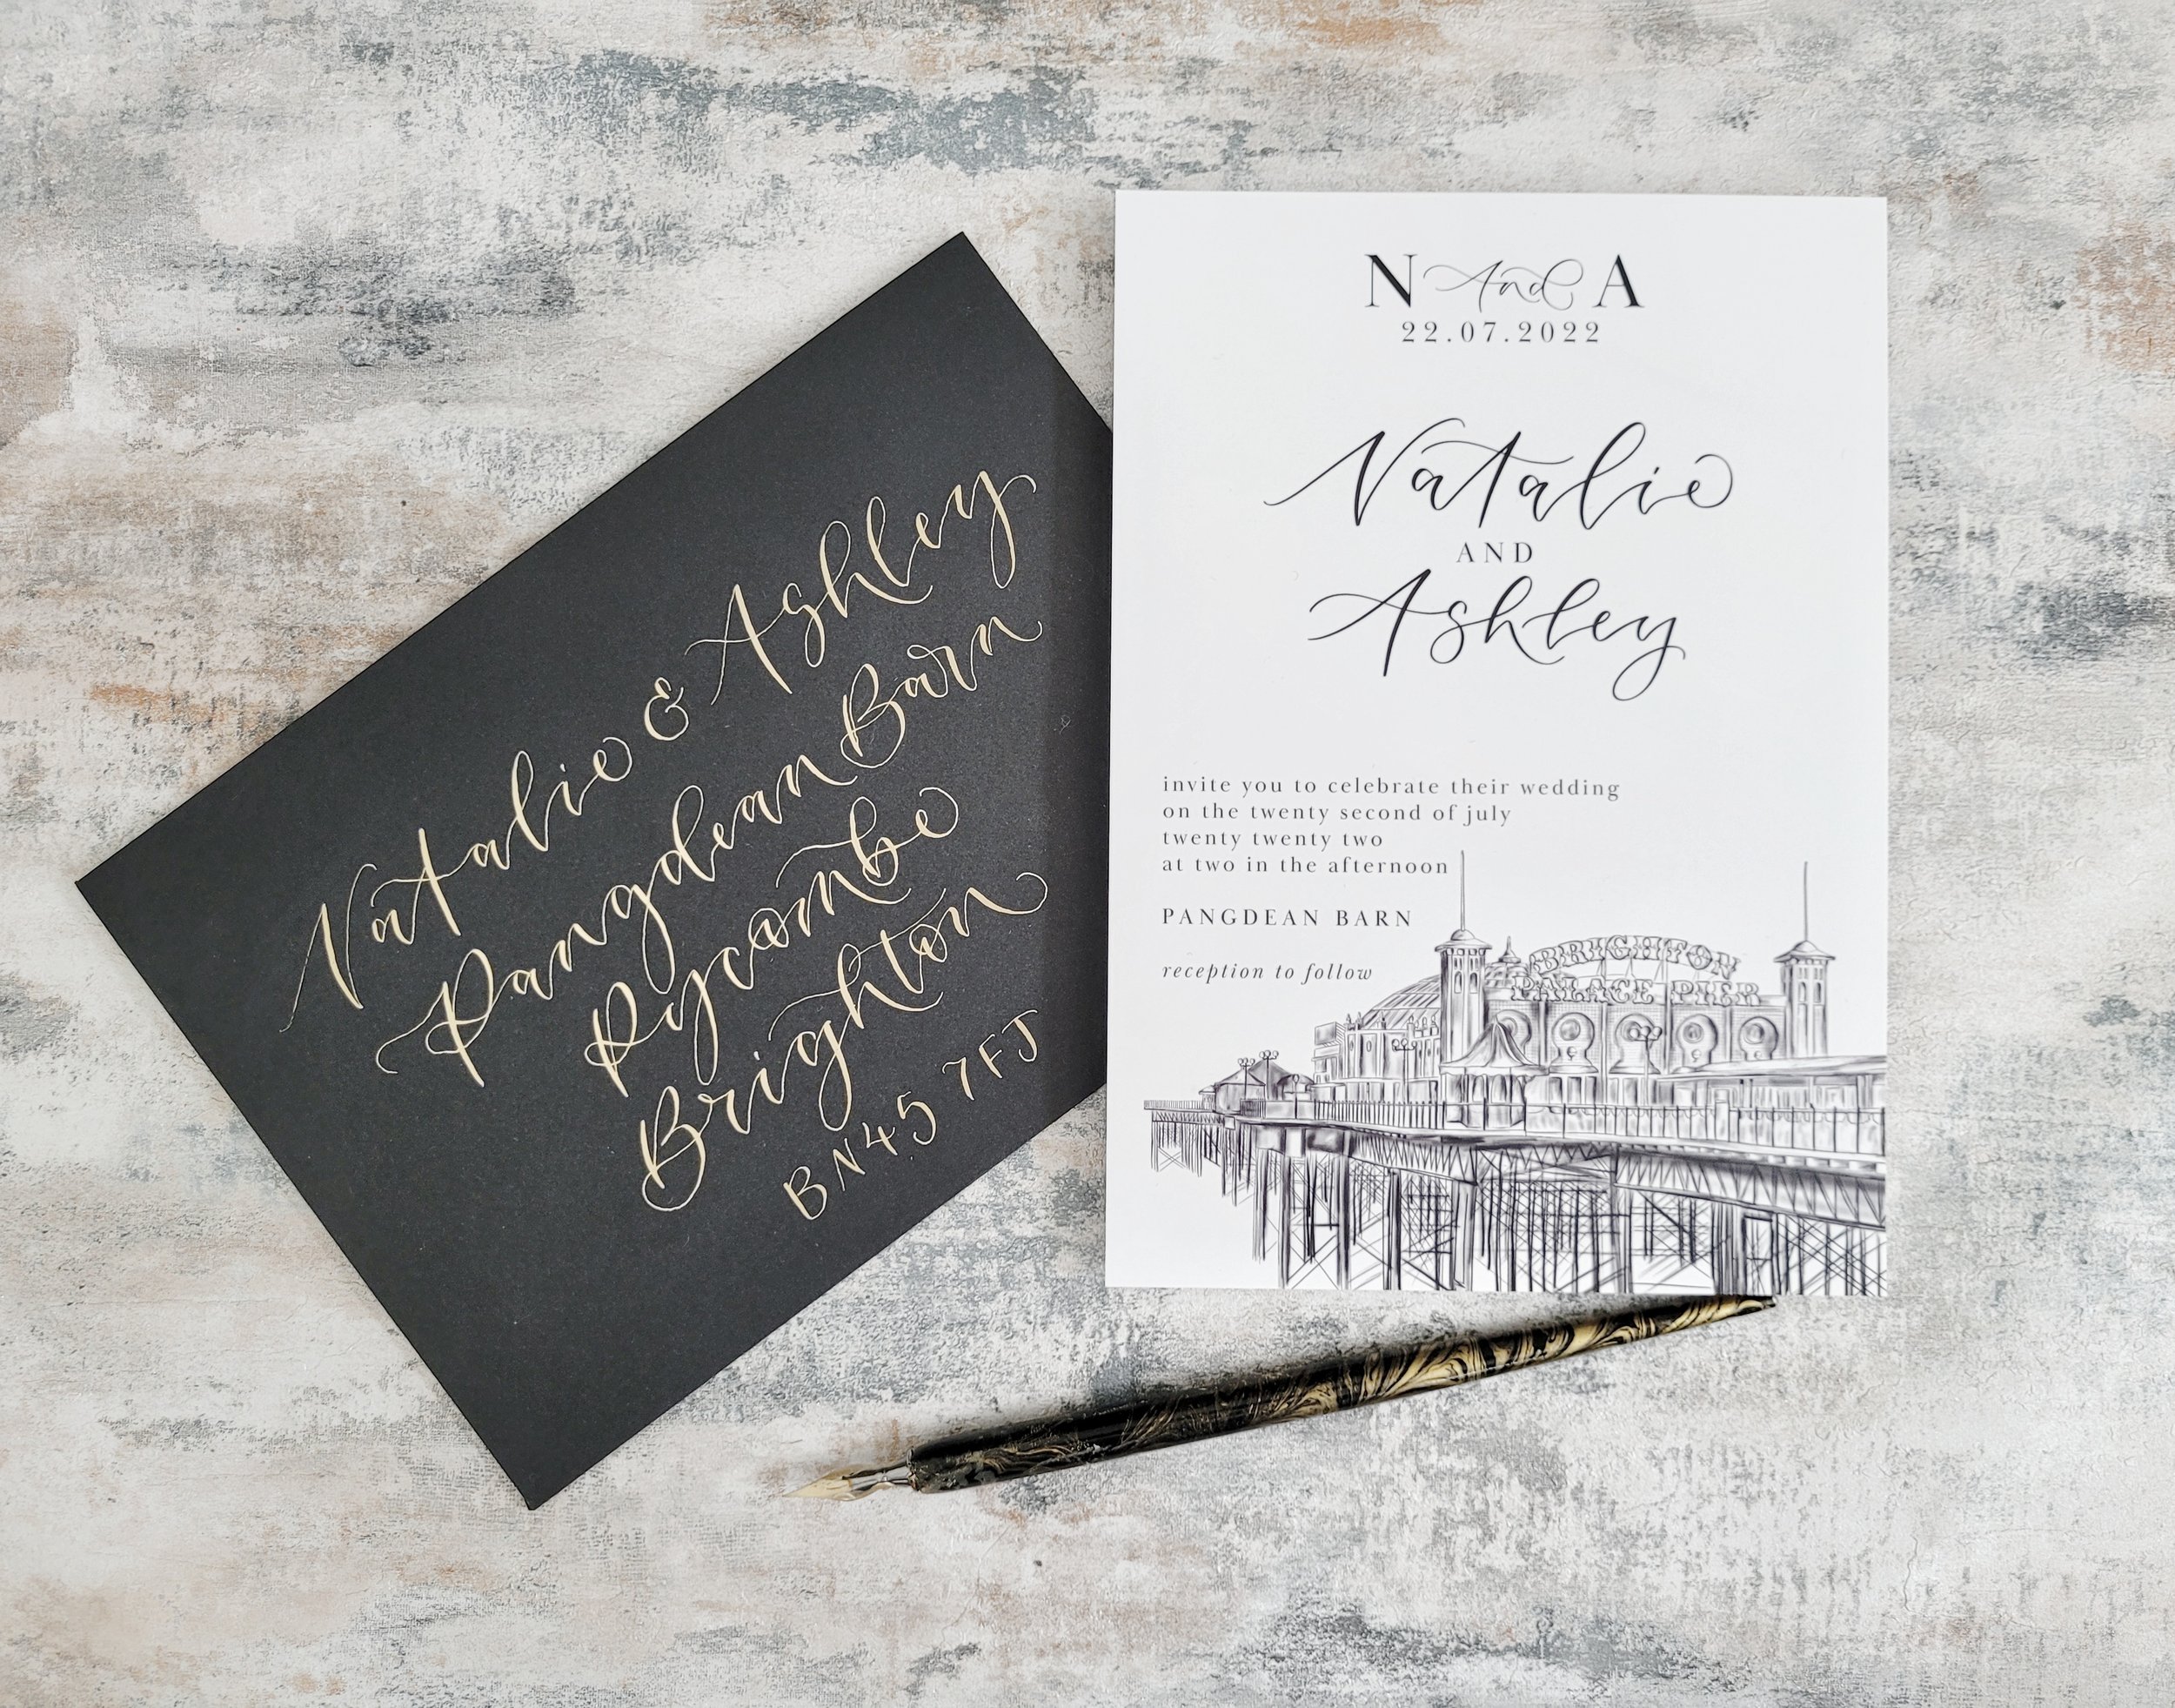 Brighton wedding stationery with pier illustration and modern calligraphy - monochrome minimalist invitation with black calligraphy envelope.jpeg